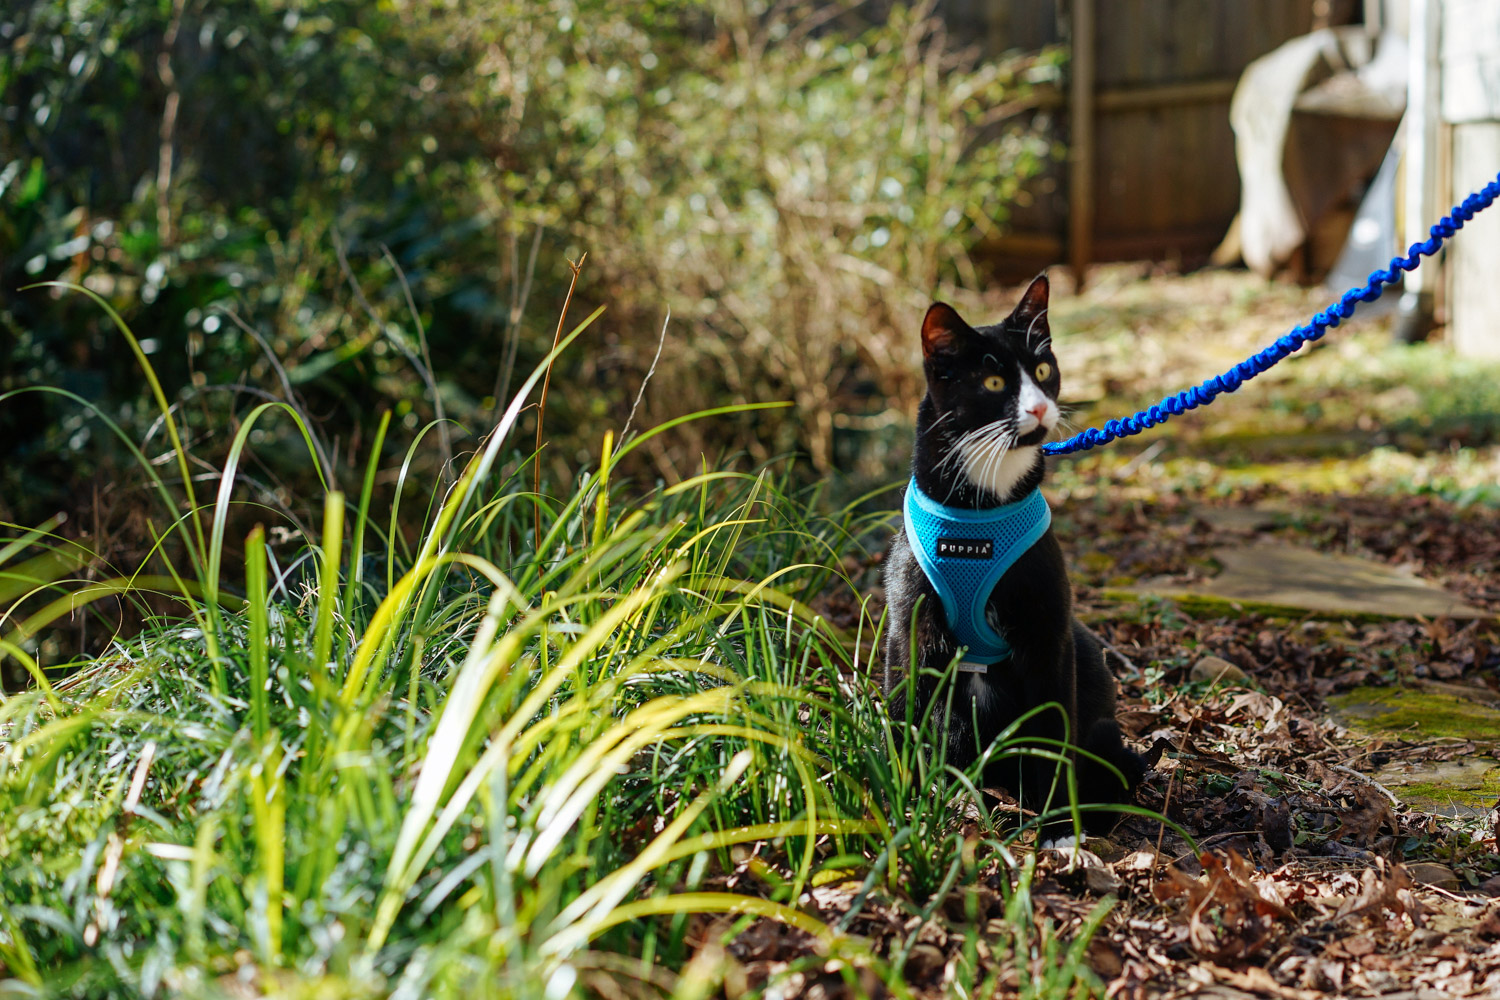 Sirius enjoys exploring the wilds of the backyard.